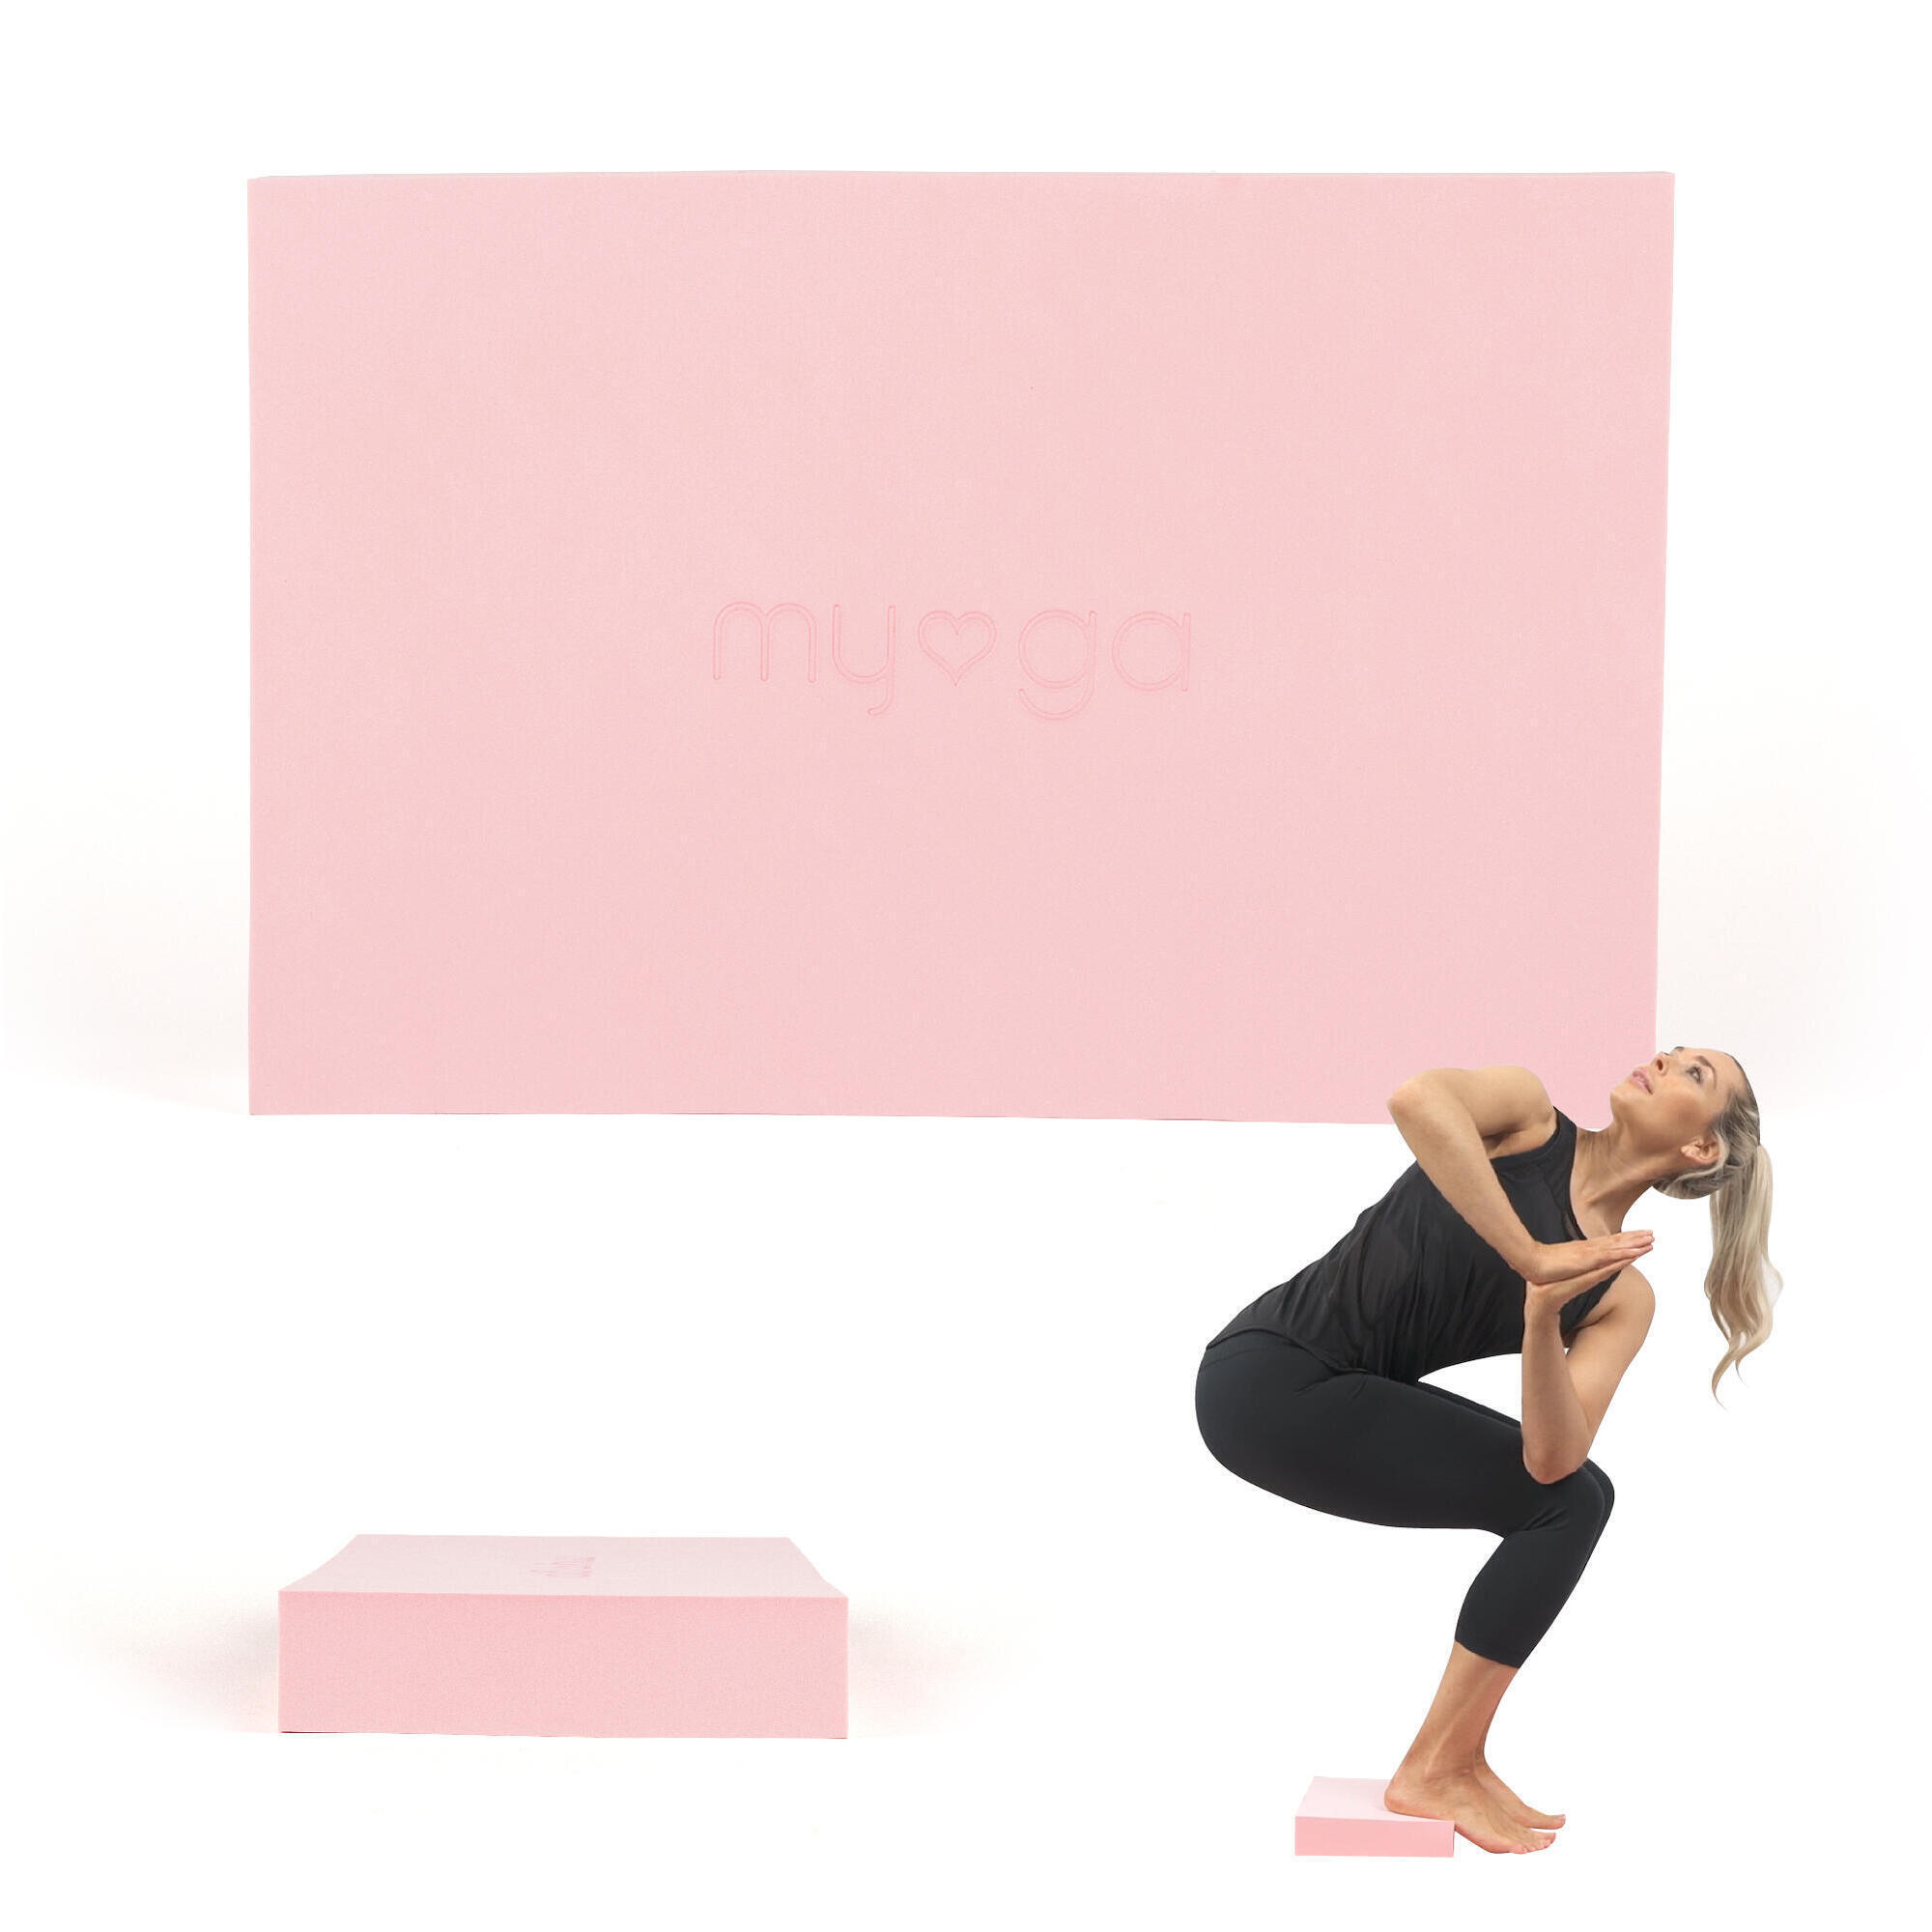 MYGA Extra Large Foam Yoga Block - Black 30cm X 20cm X 5cm At Urban  Outfitters for Women